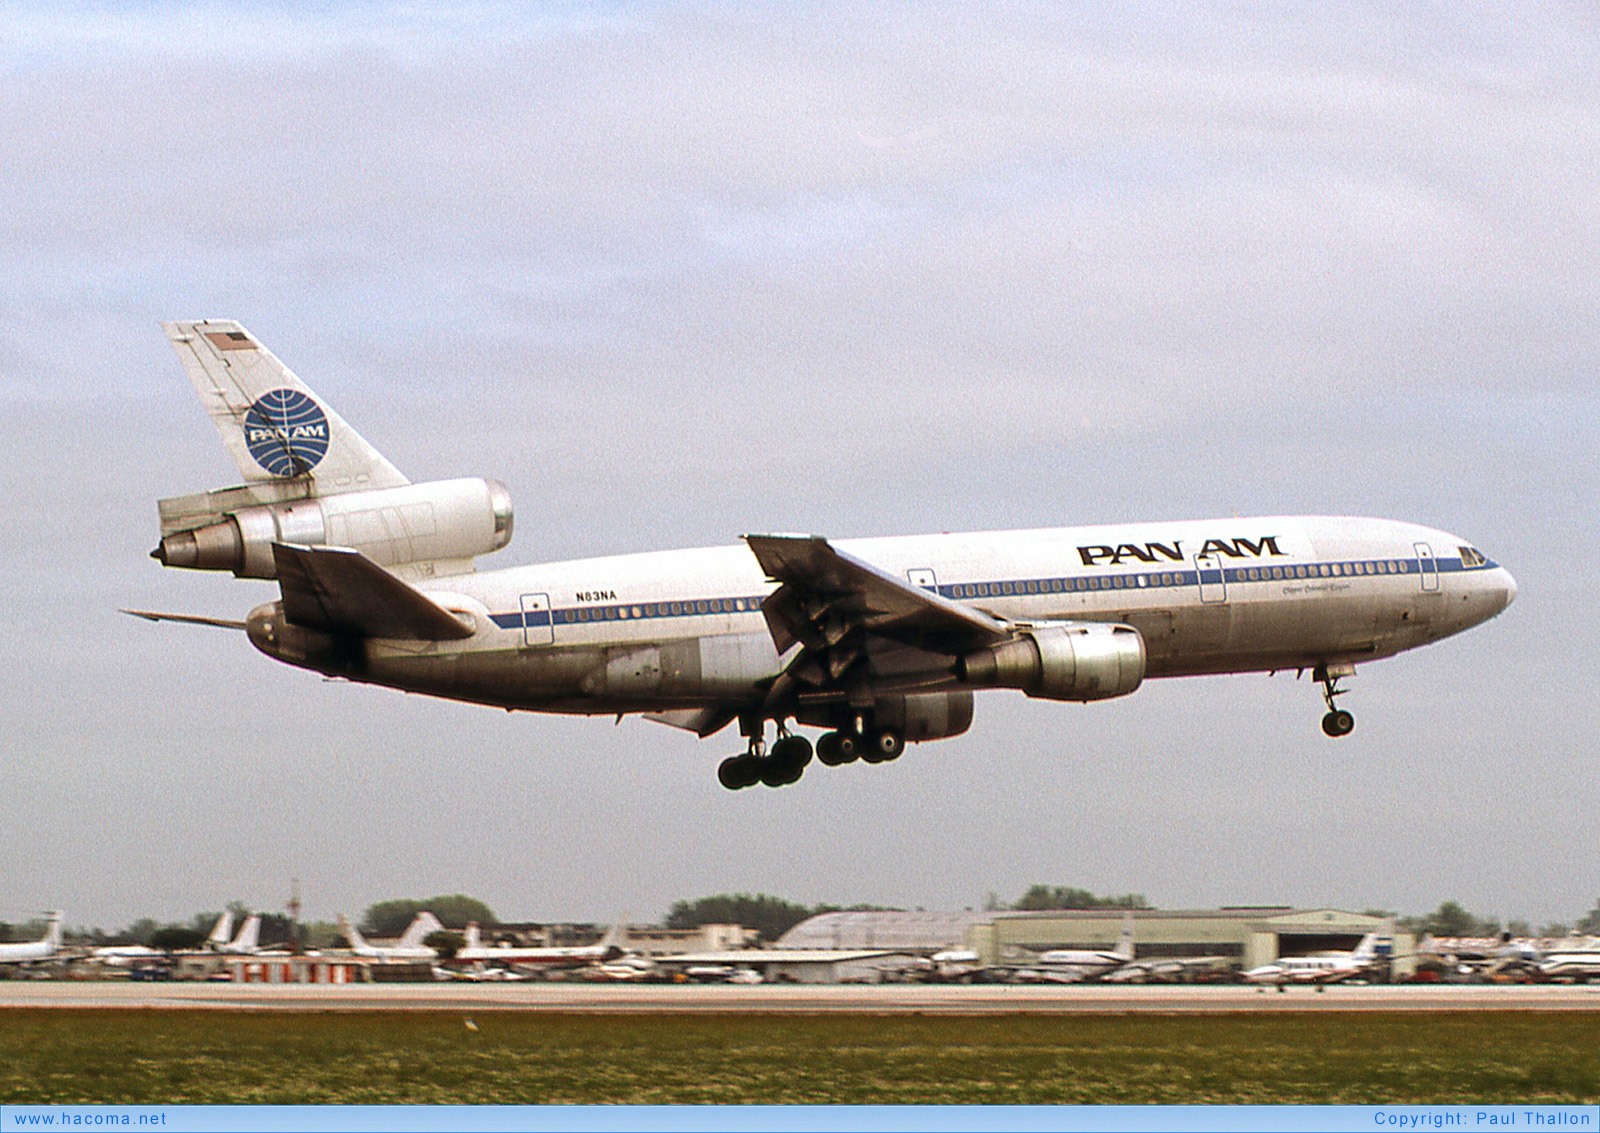 Photo of N83NA - Pan Am Clipper Celestial Empire - Miami International Airport - Nov 29, 1983